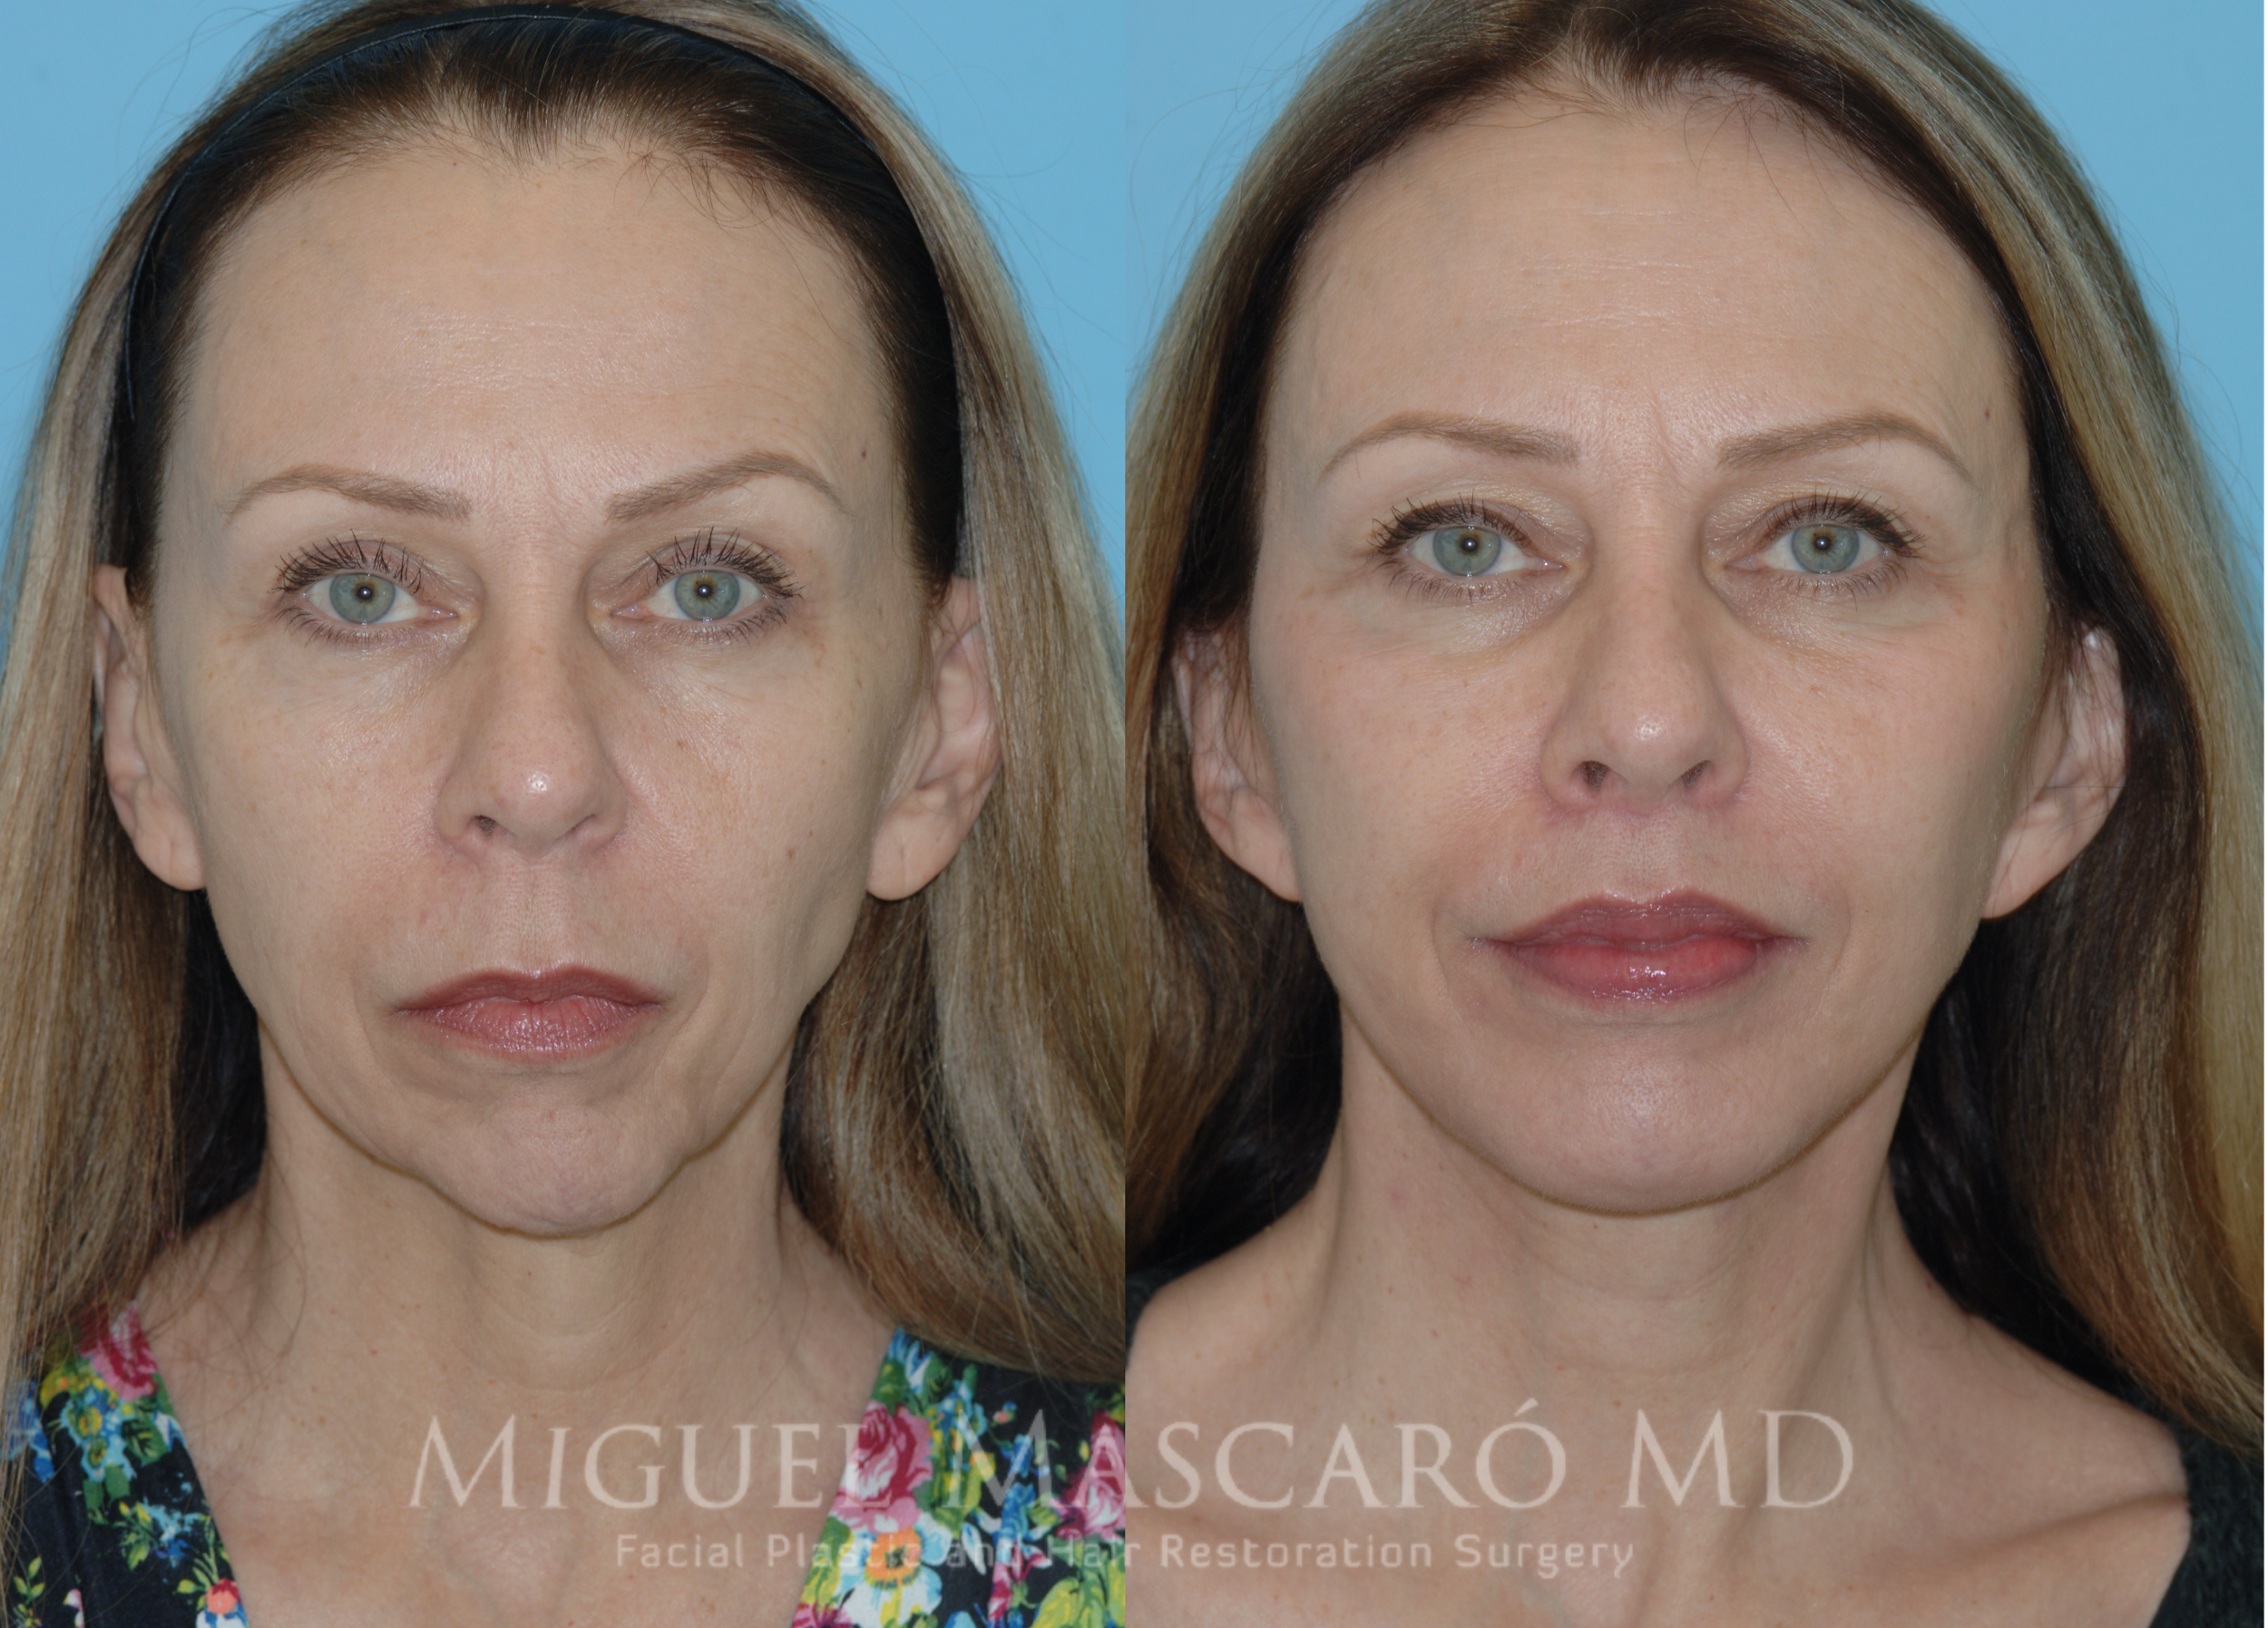  deep plane facelift, chin implant, lip lift, midface fat grafting  